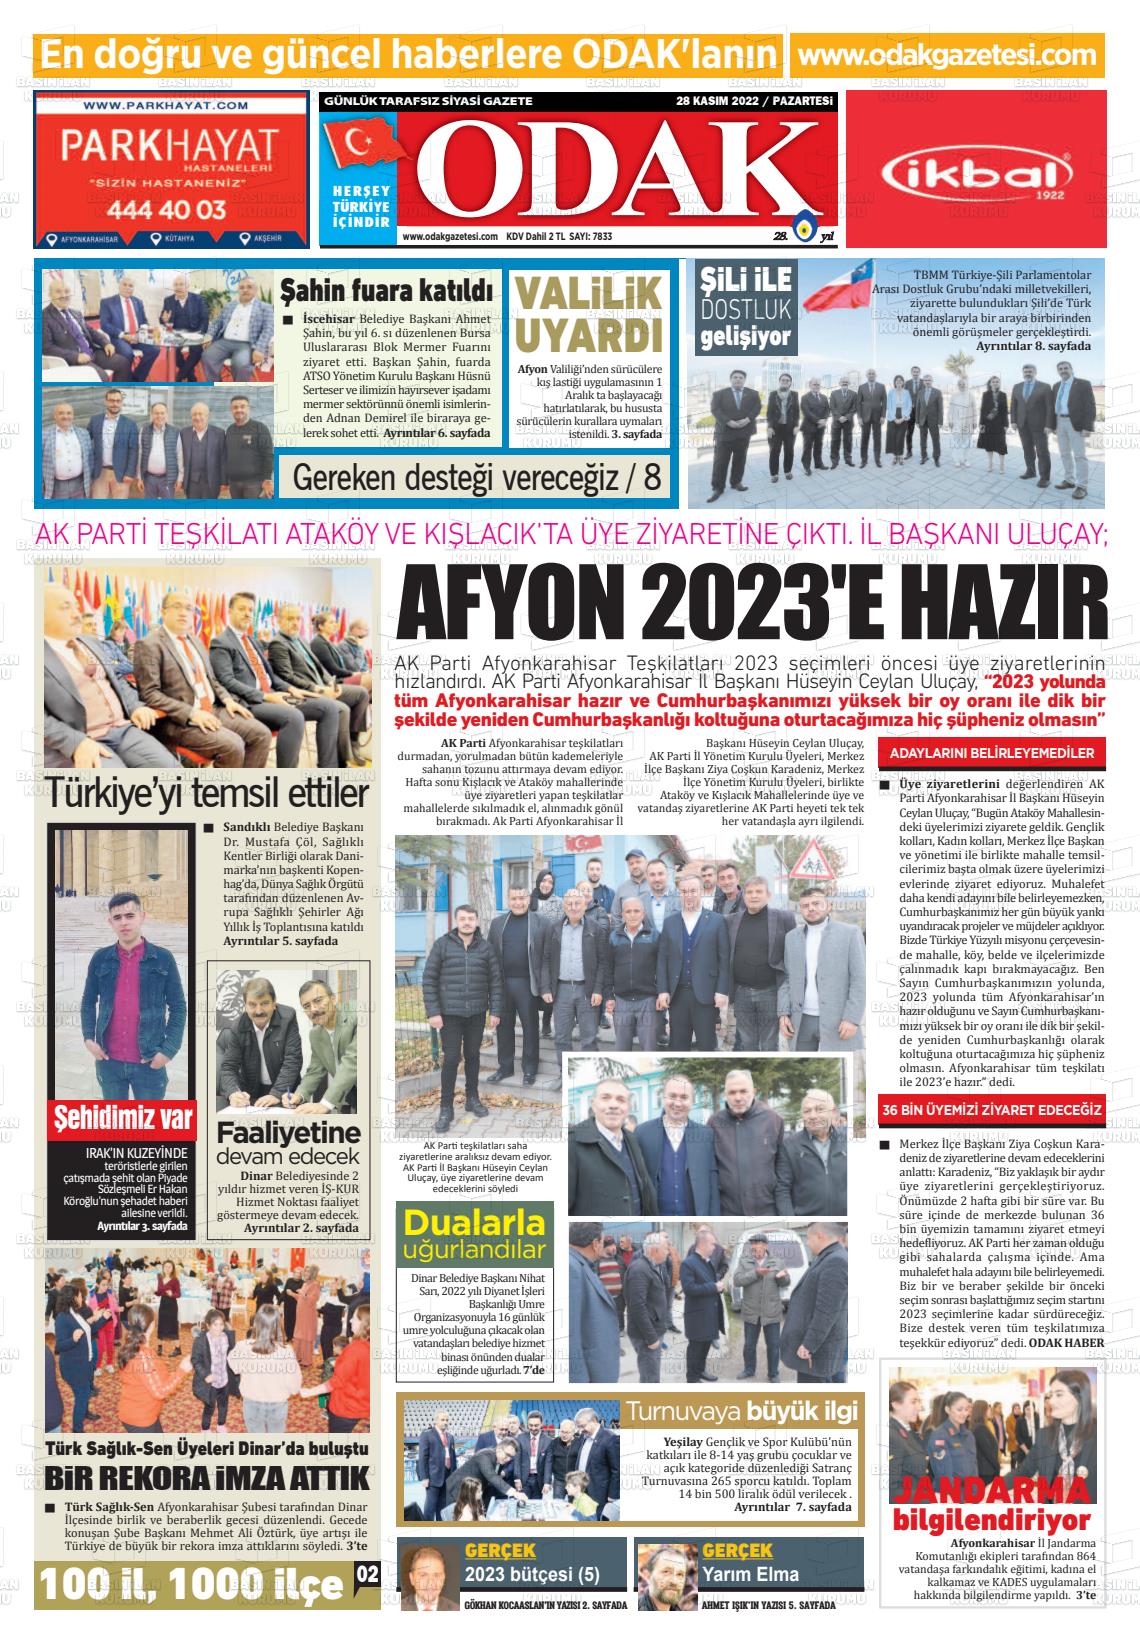 28 Kasım 2022 Odak Gazete Manşeti